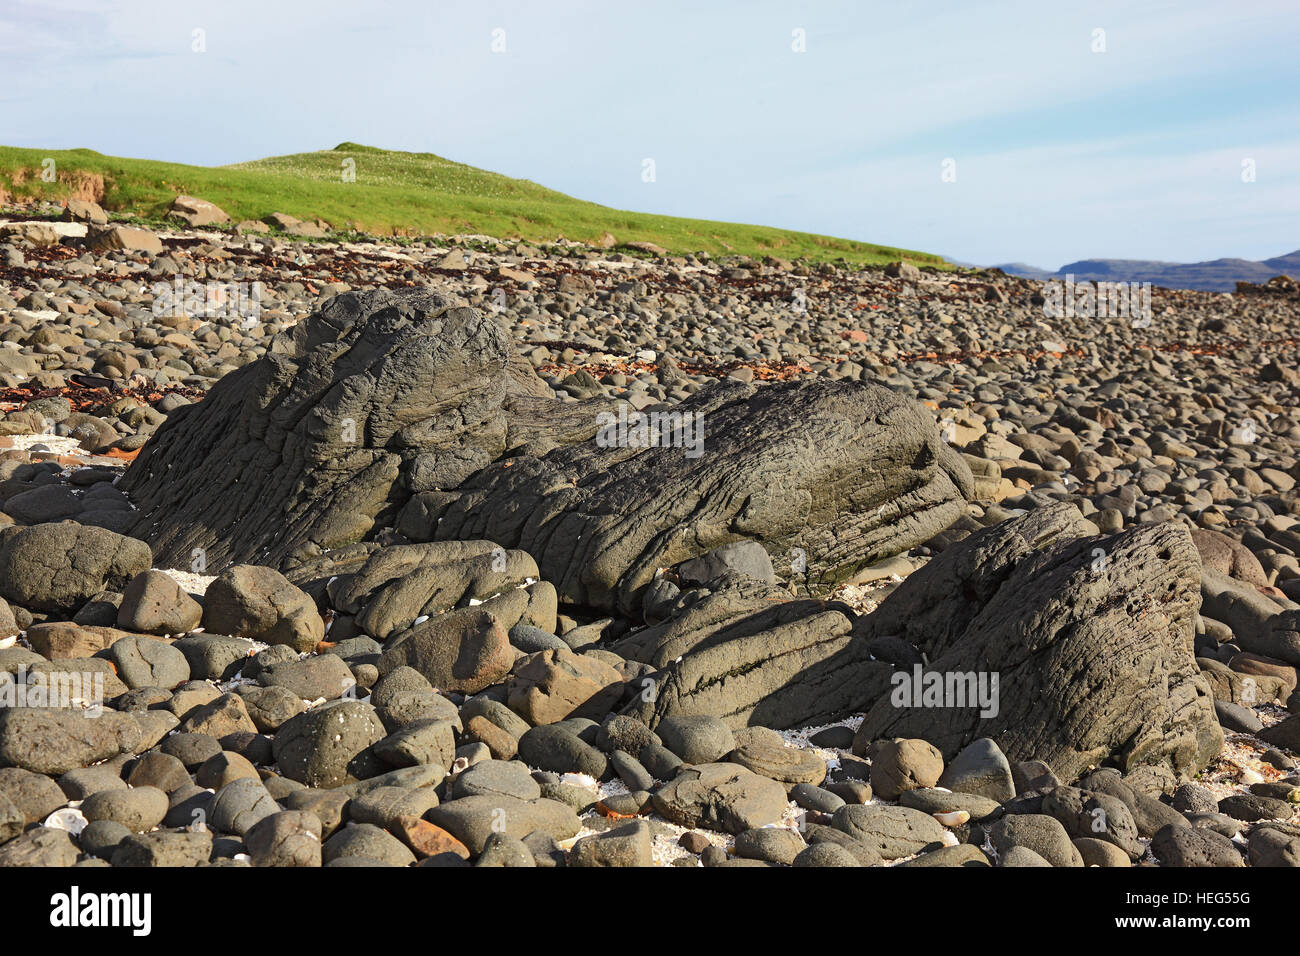 Schottland, die Inneren Hebriden, Isle Of Skye, Duirinish Halbinsel, Basel-Landschaft bin Coral Beach at Claigan, Graue Steine Gegenspieler Formen Stockfoto